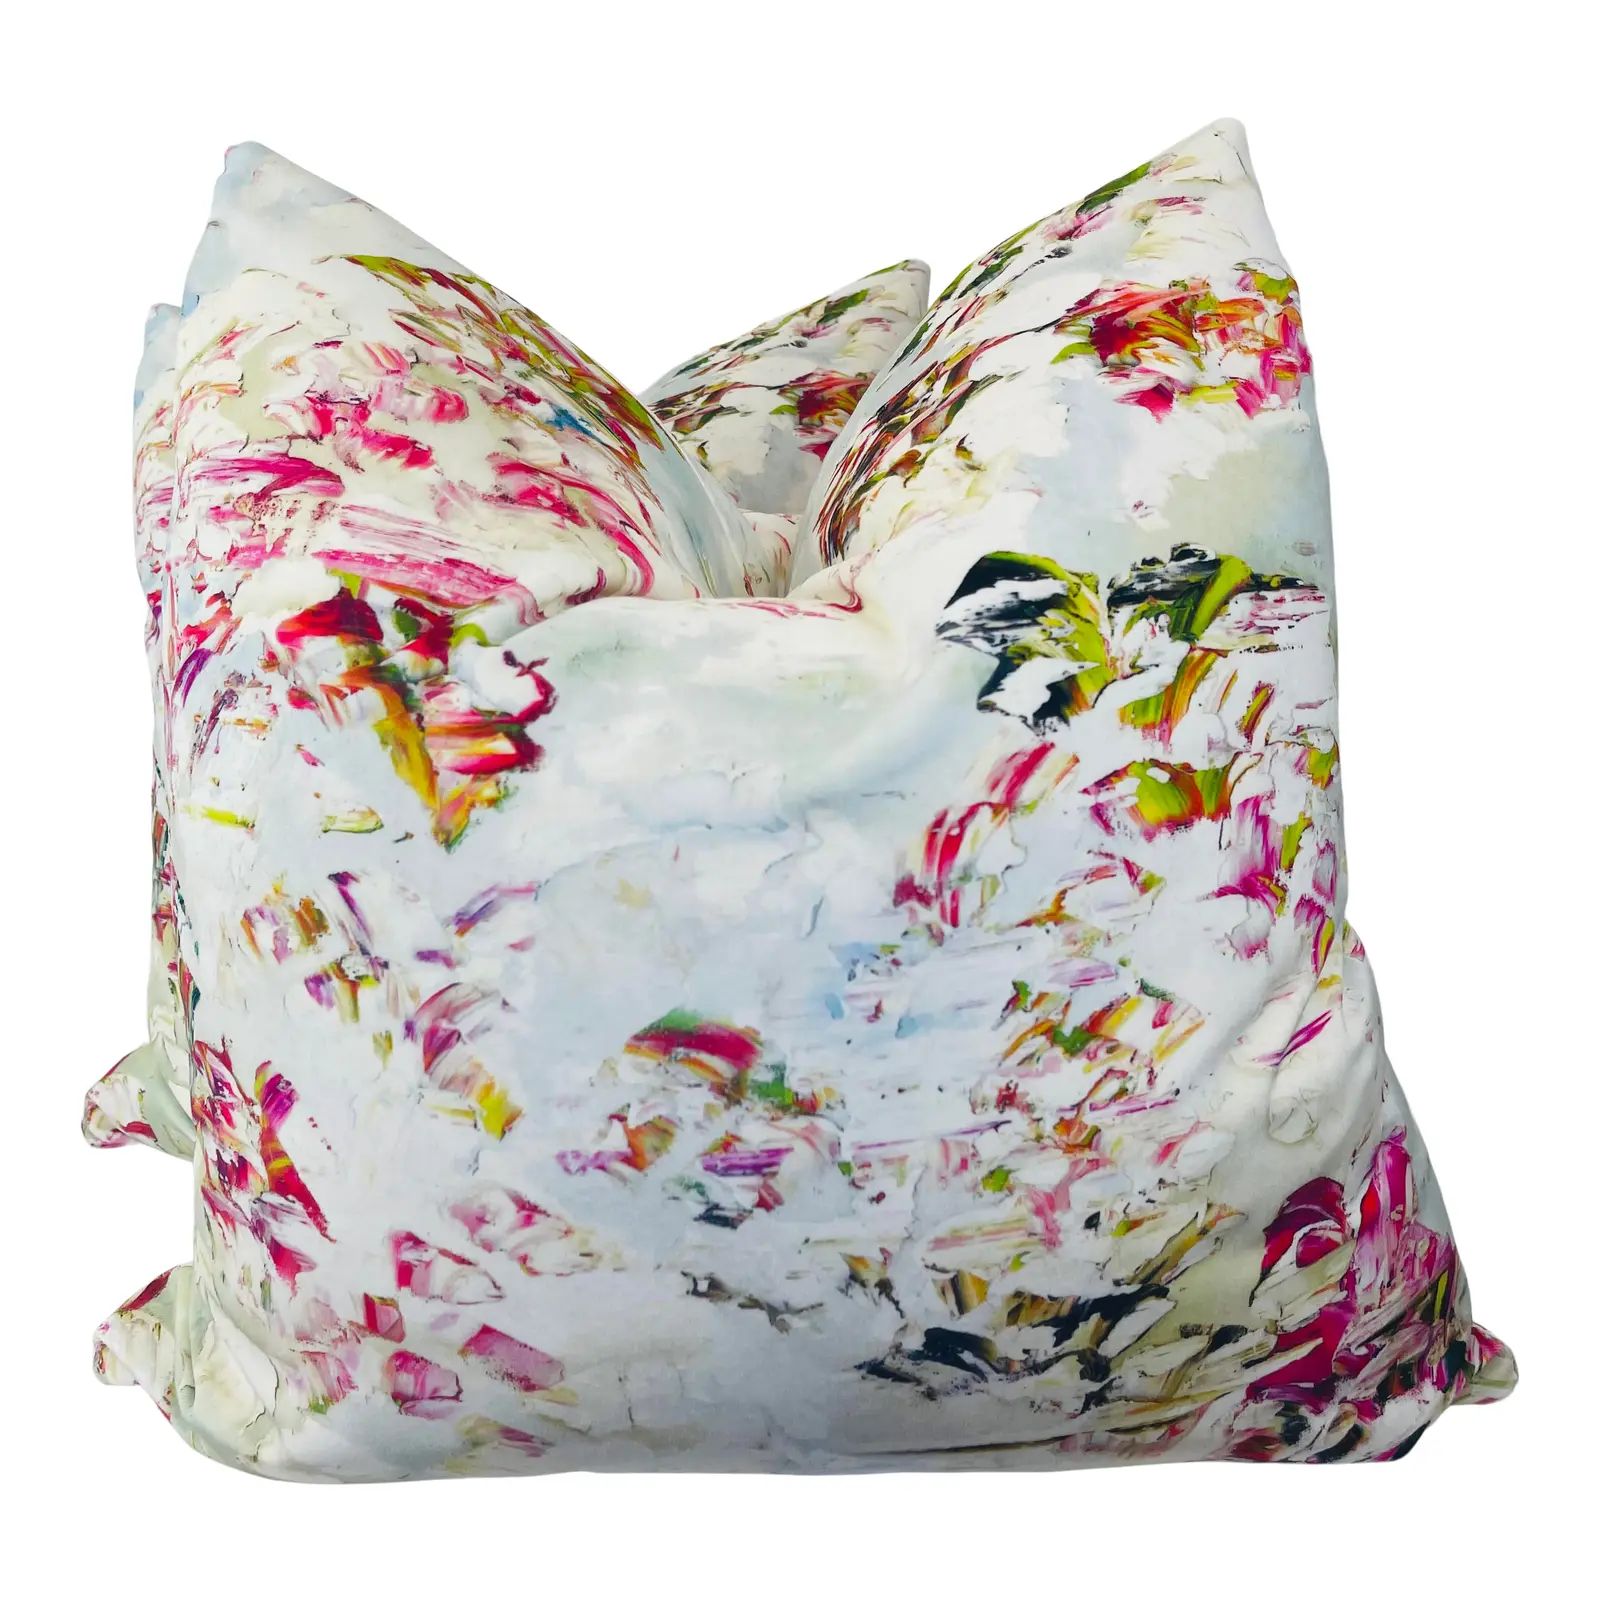 Black Edition “Pleasure Gardens Velvet” in Bloom 22” Pillows-A Pair | Chairish